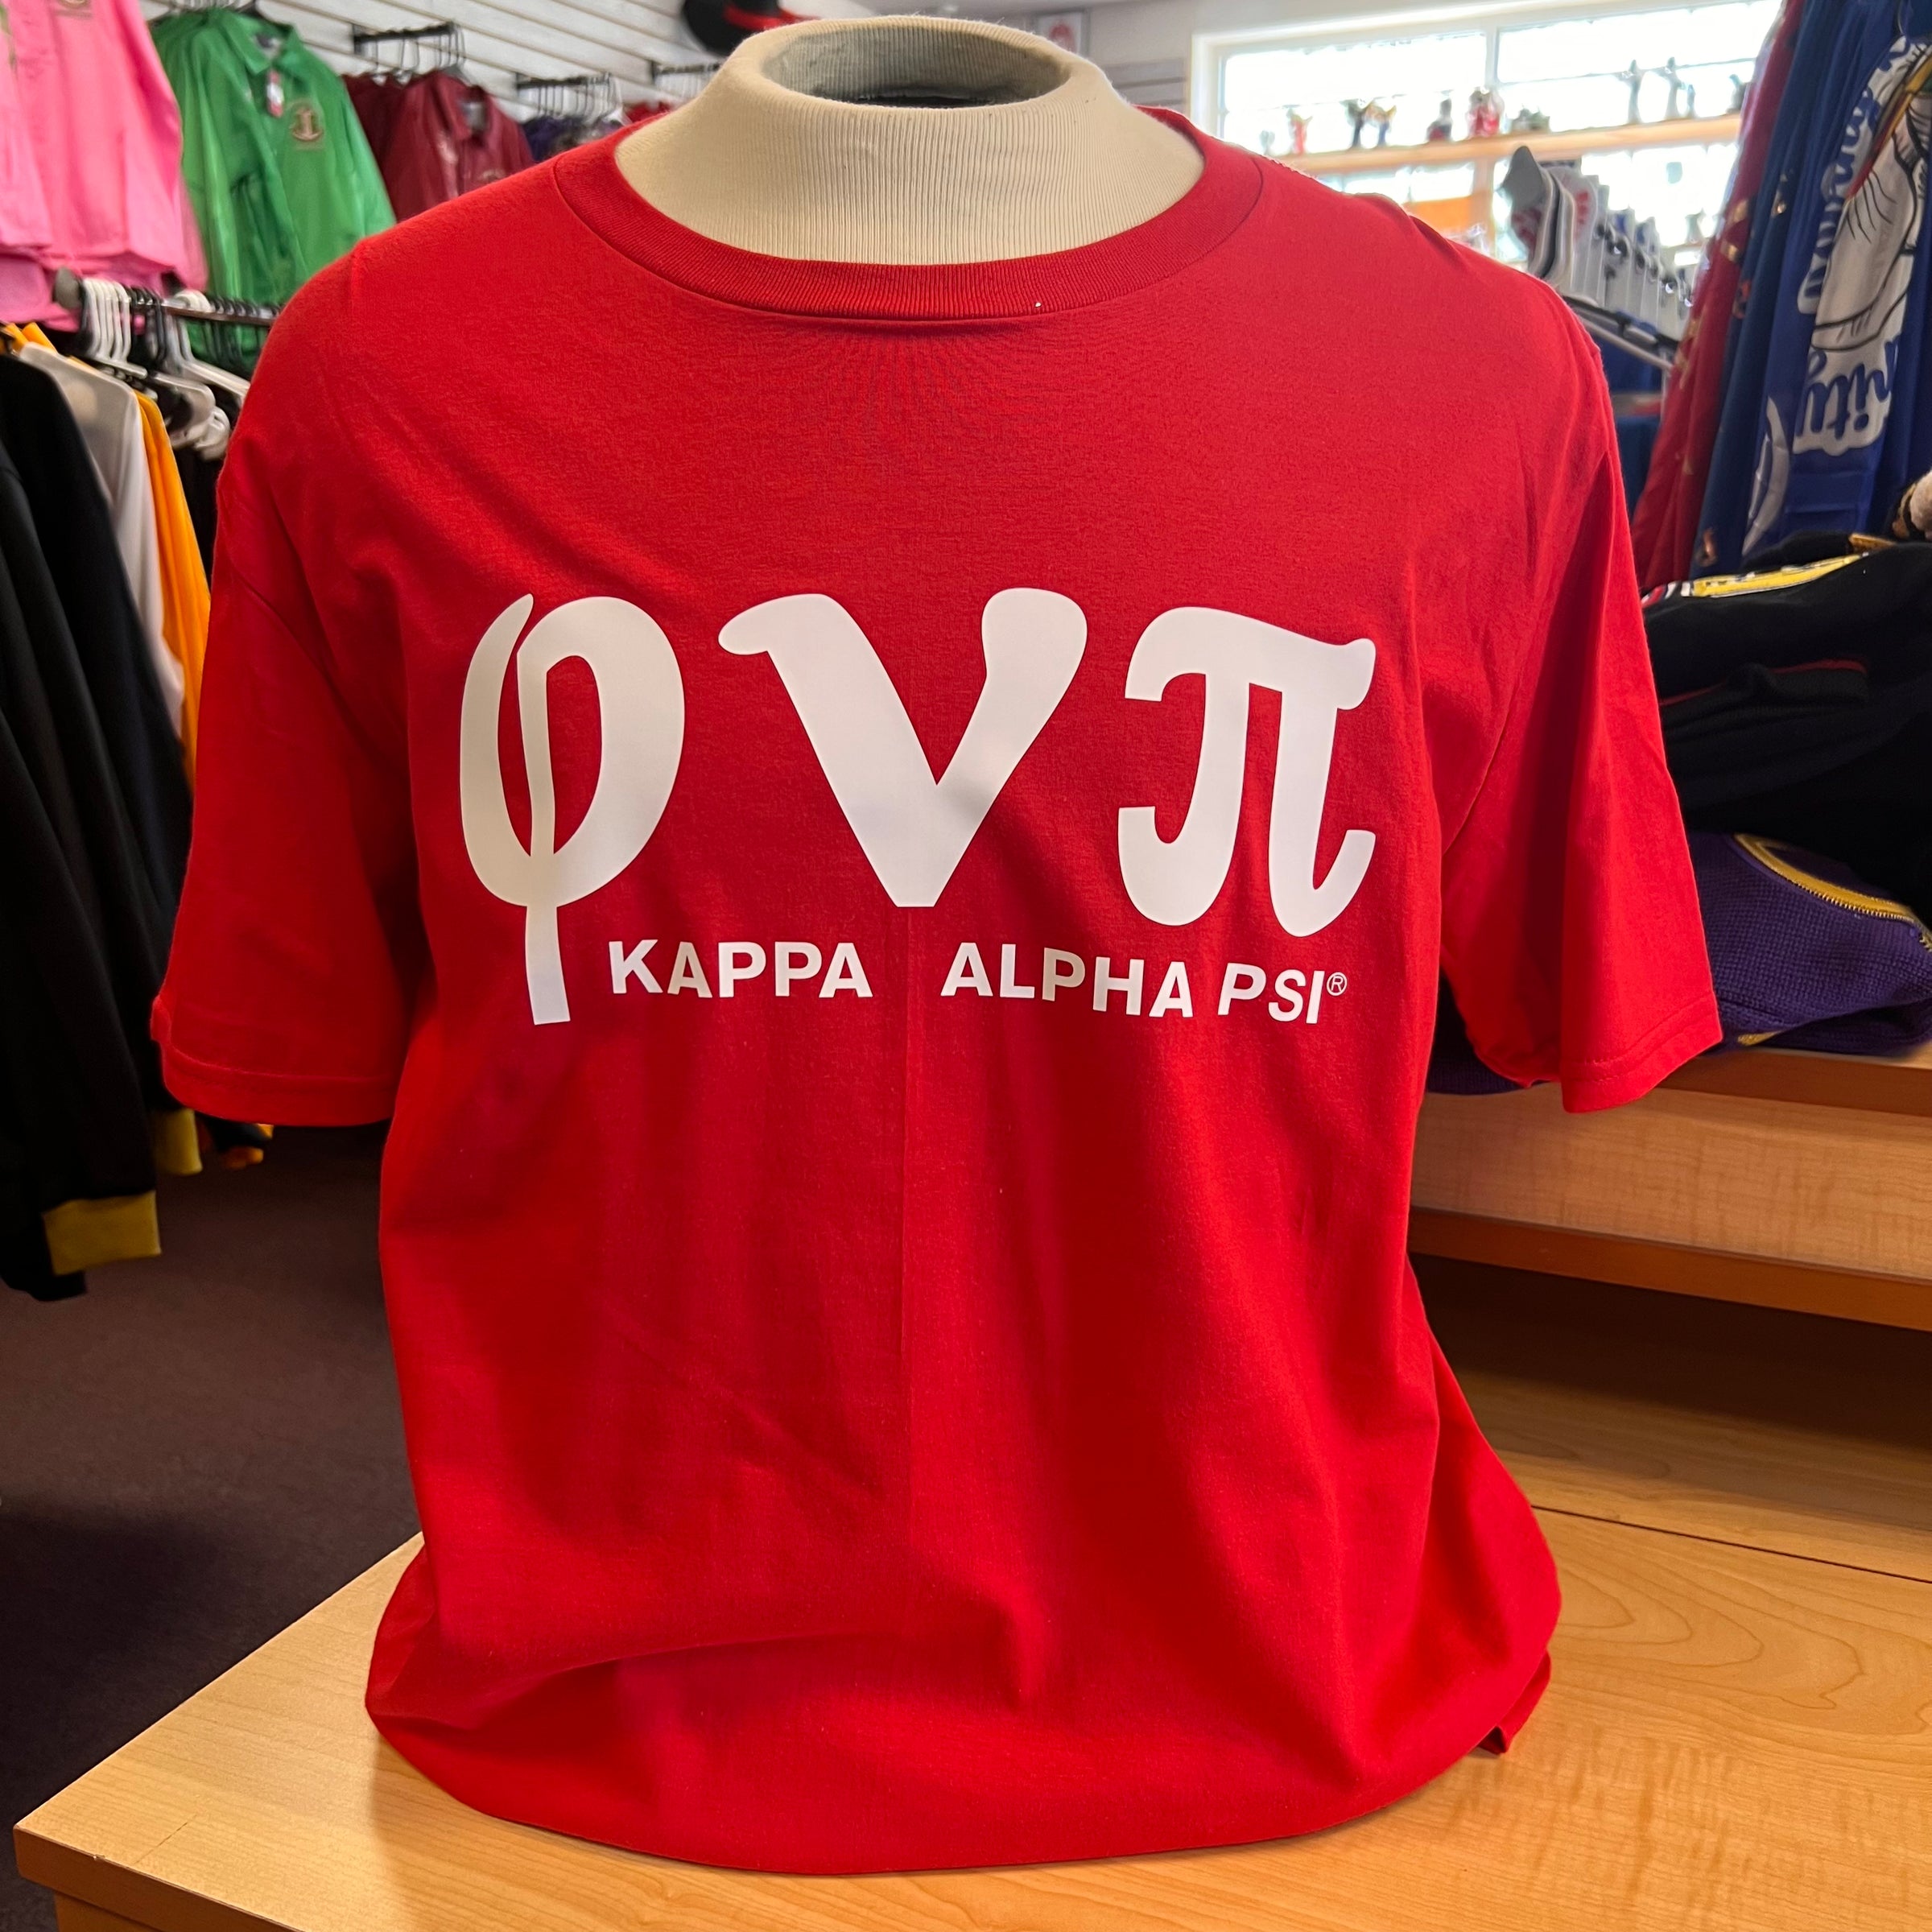 Kappa Phi Nu Pi T-shirt Red Specialties